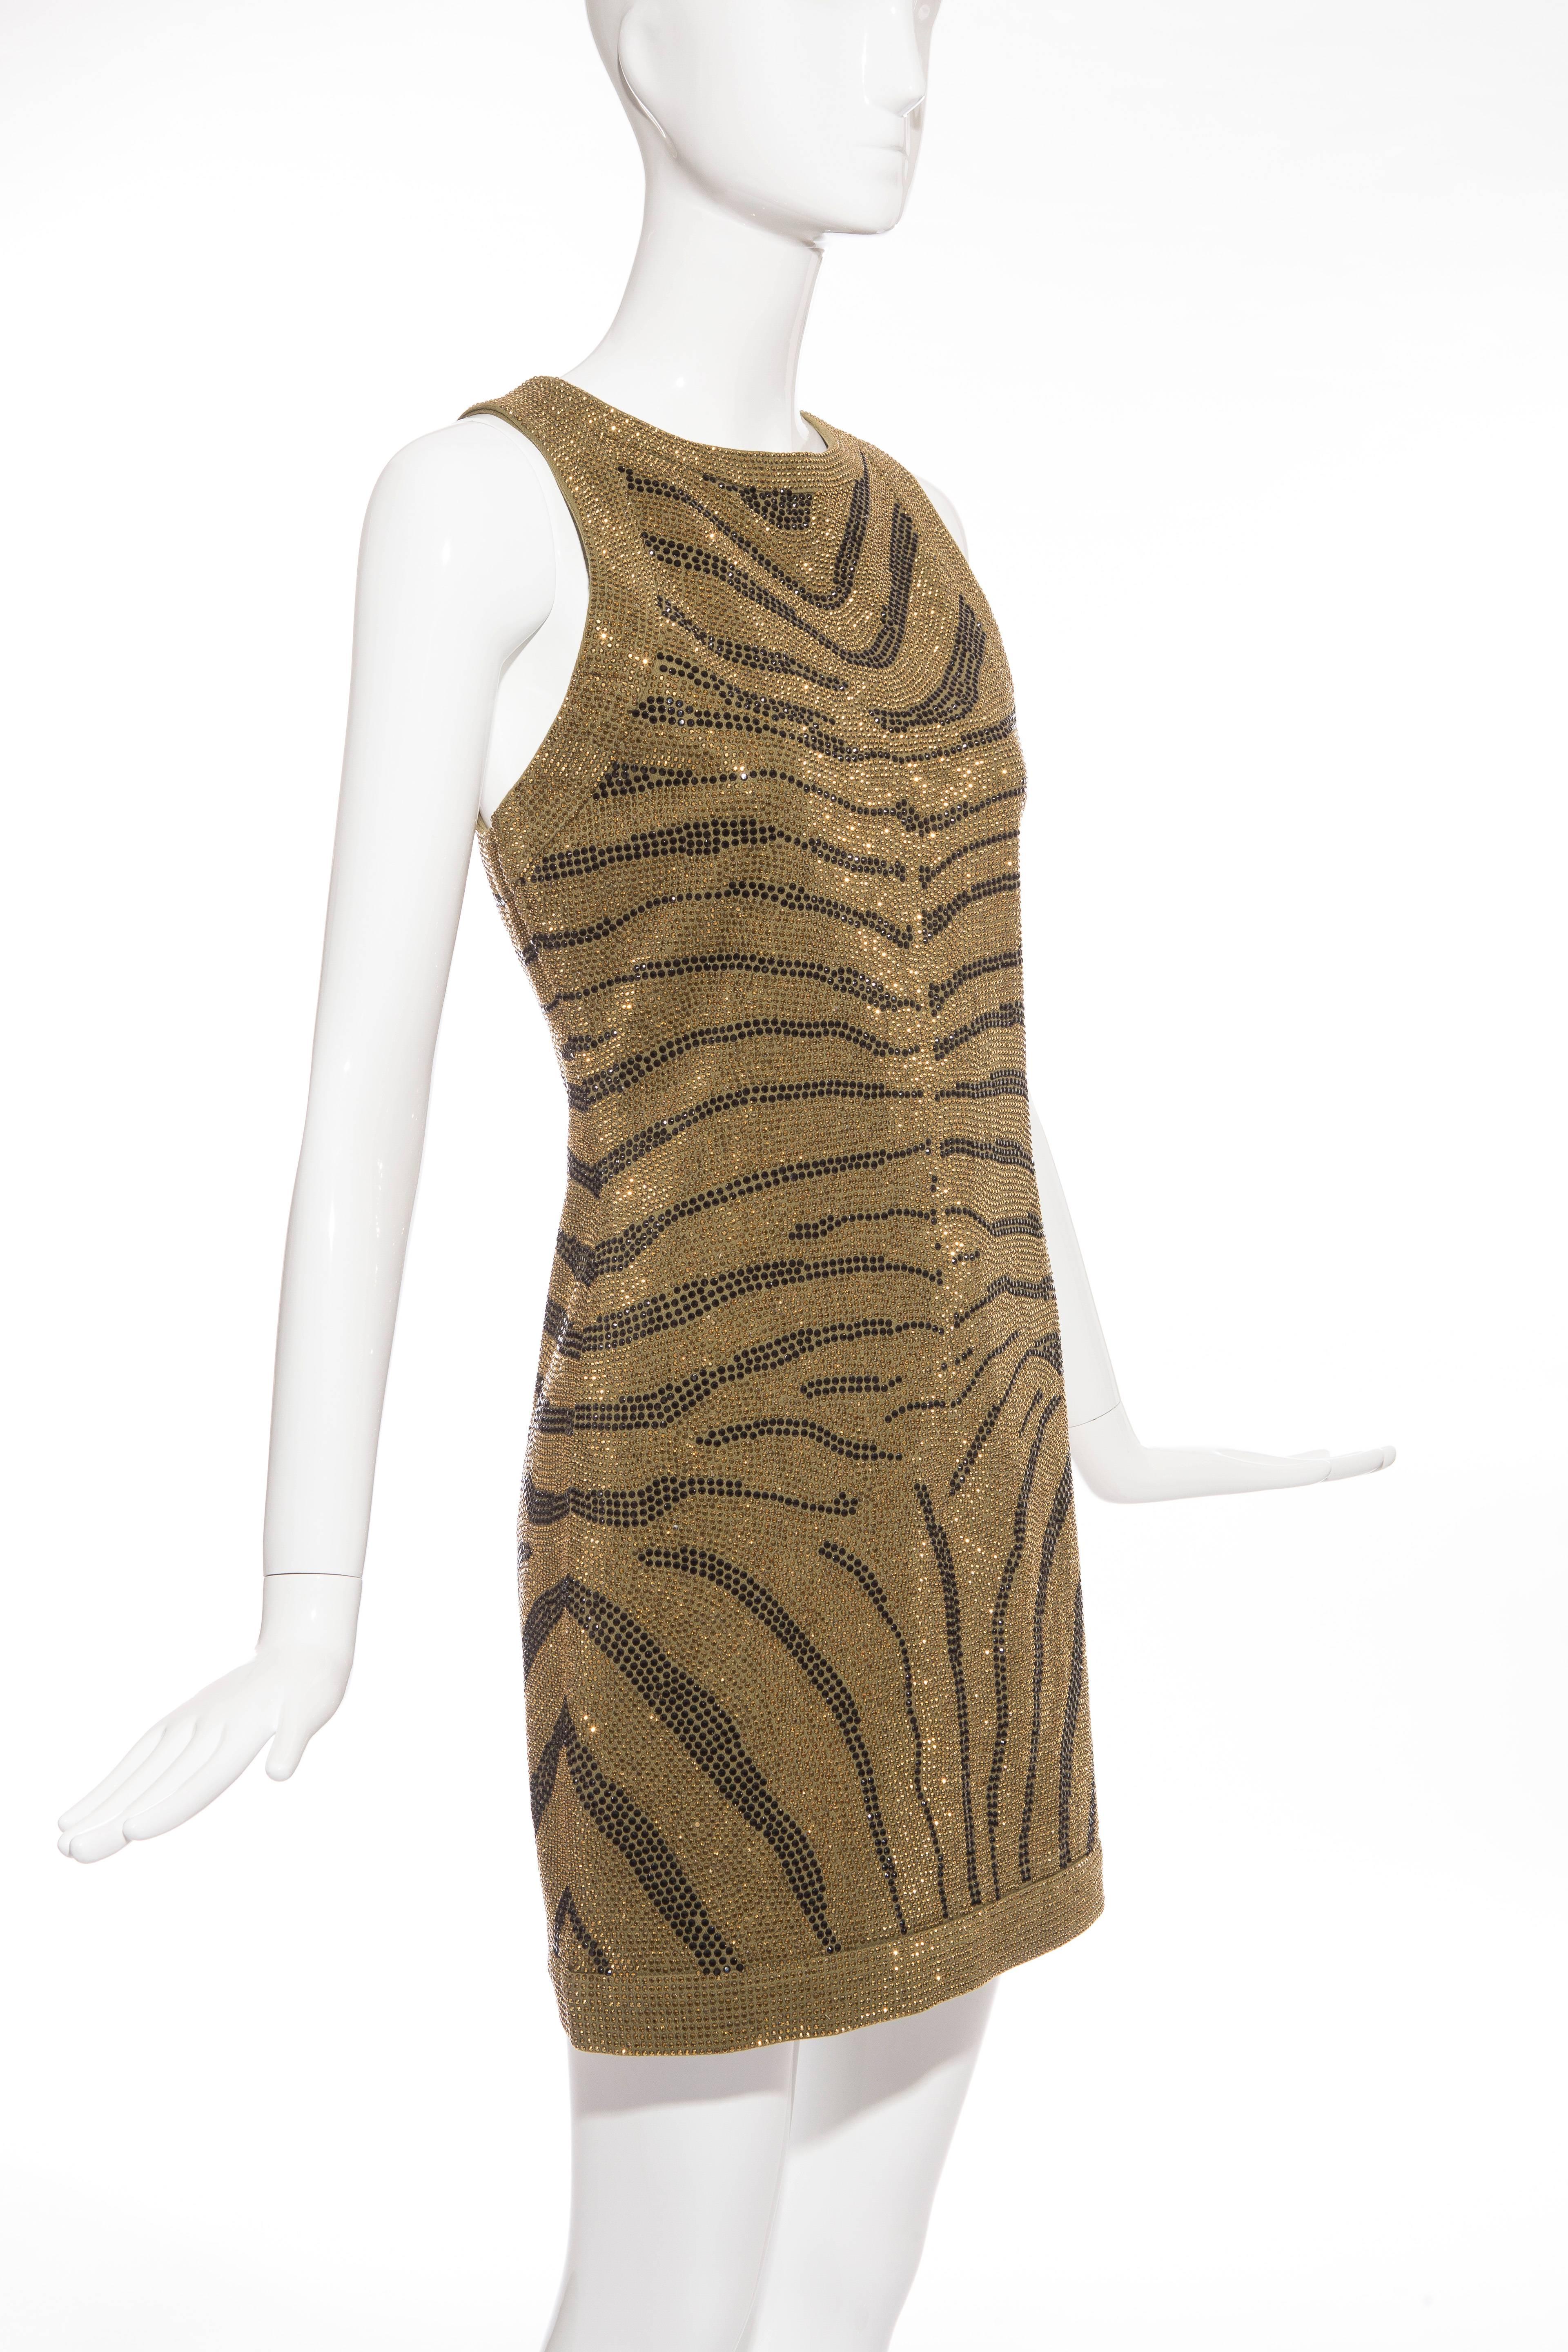 Women's Balmain Runway Gold Zebra Print Crystal Embellished Evening Dress, Pre-Fall 2014 For Sale